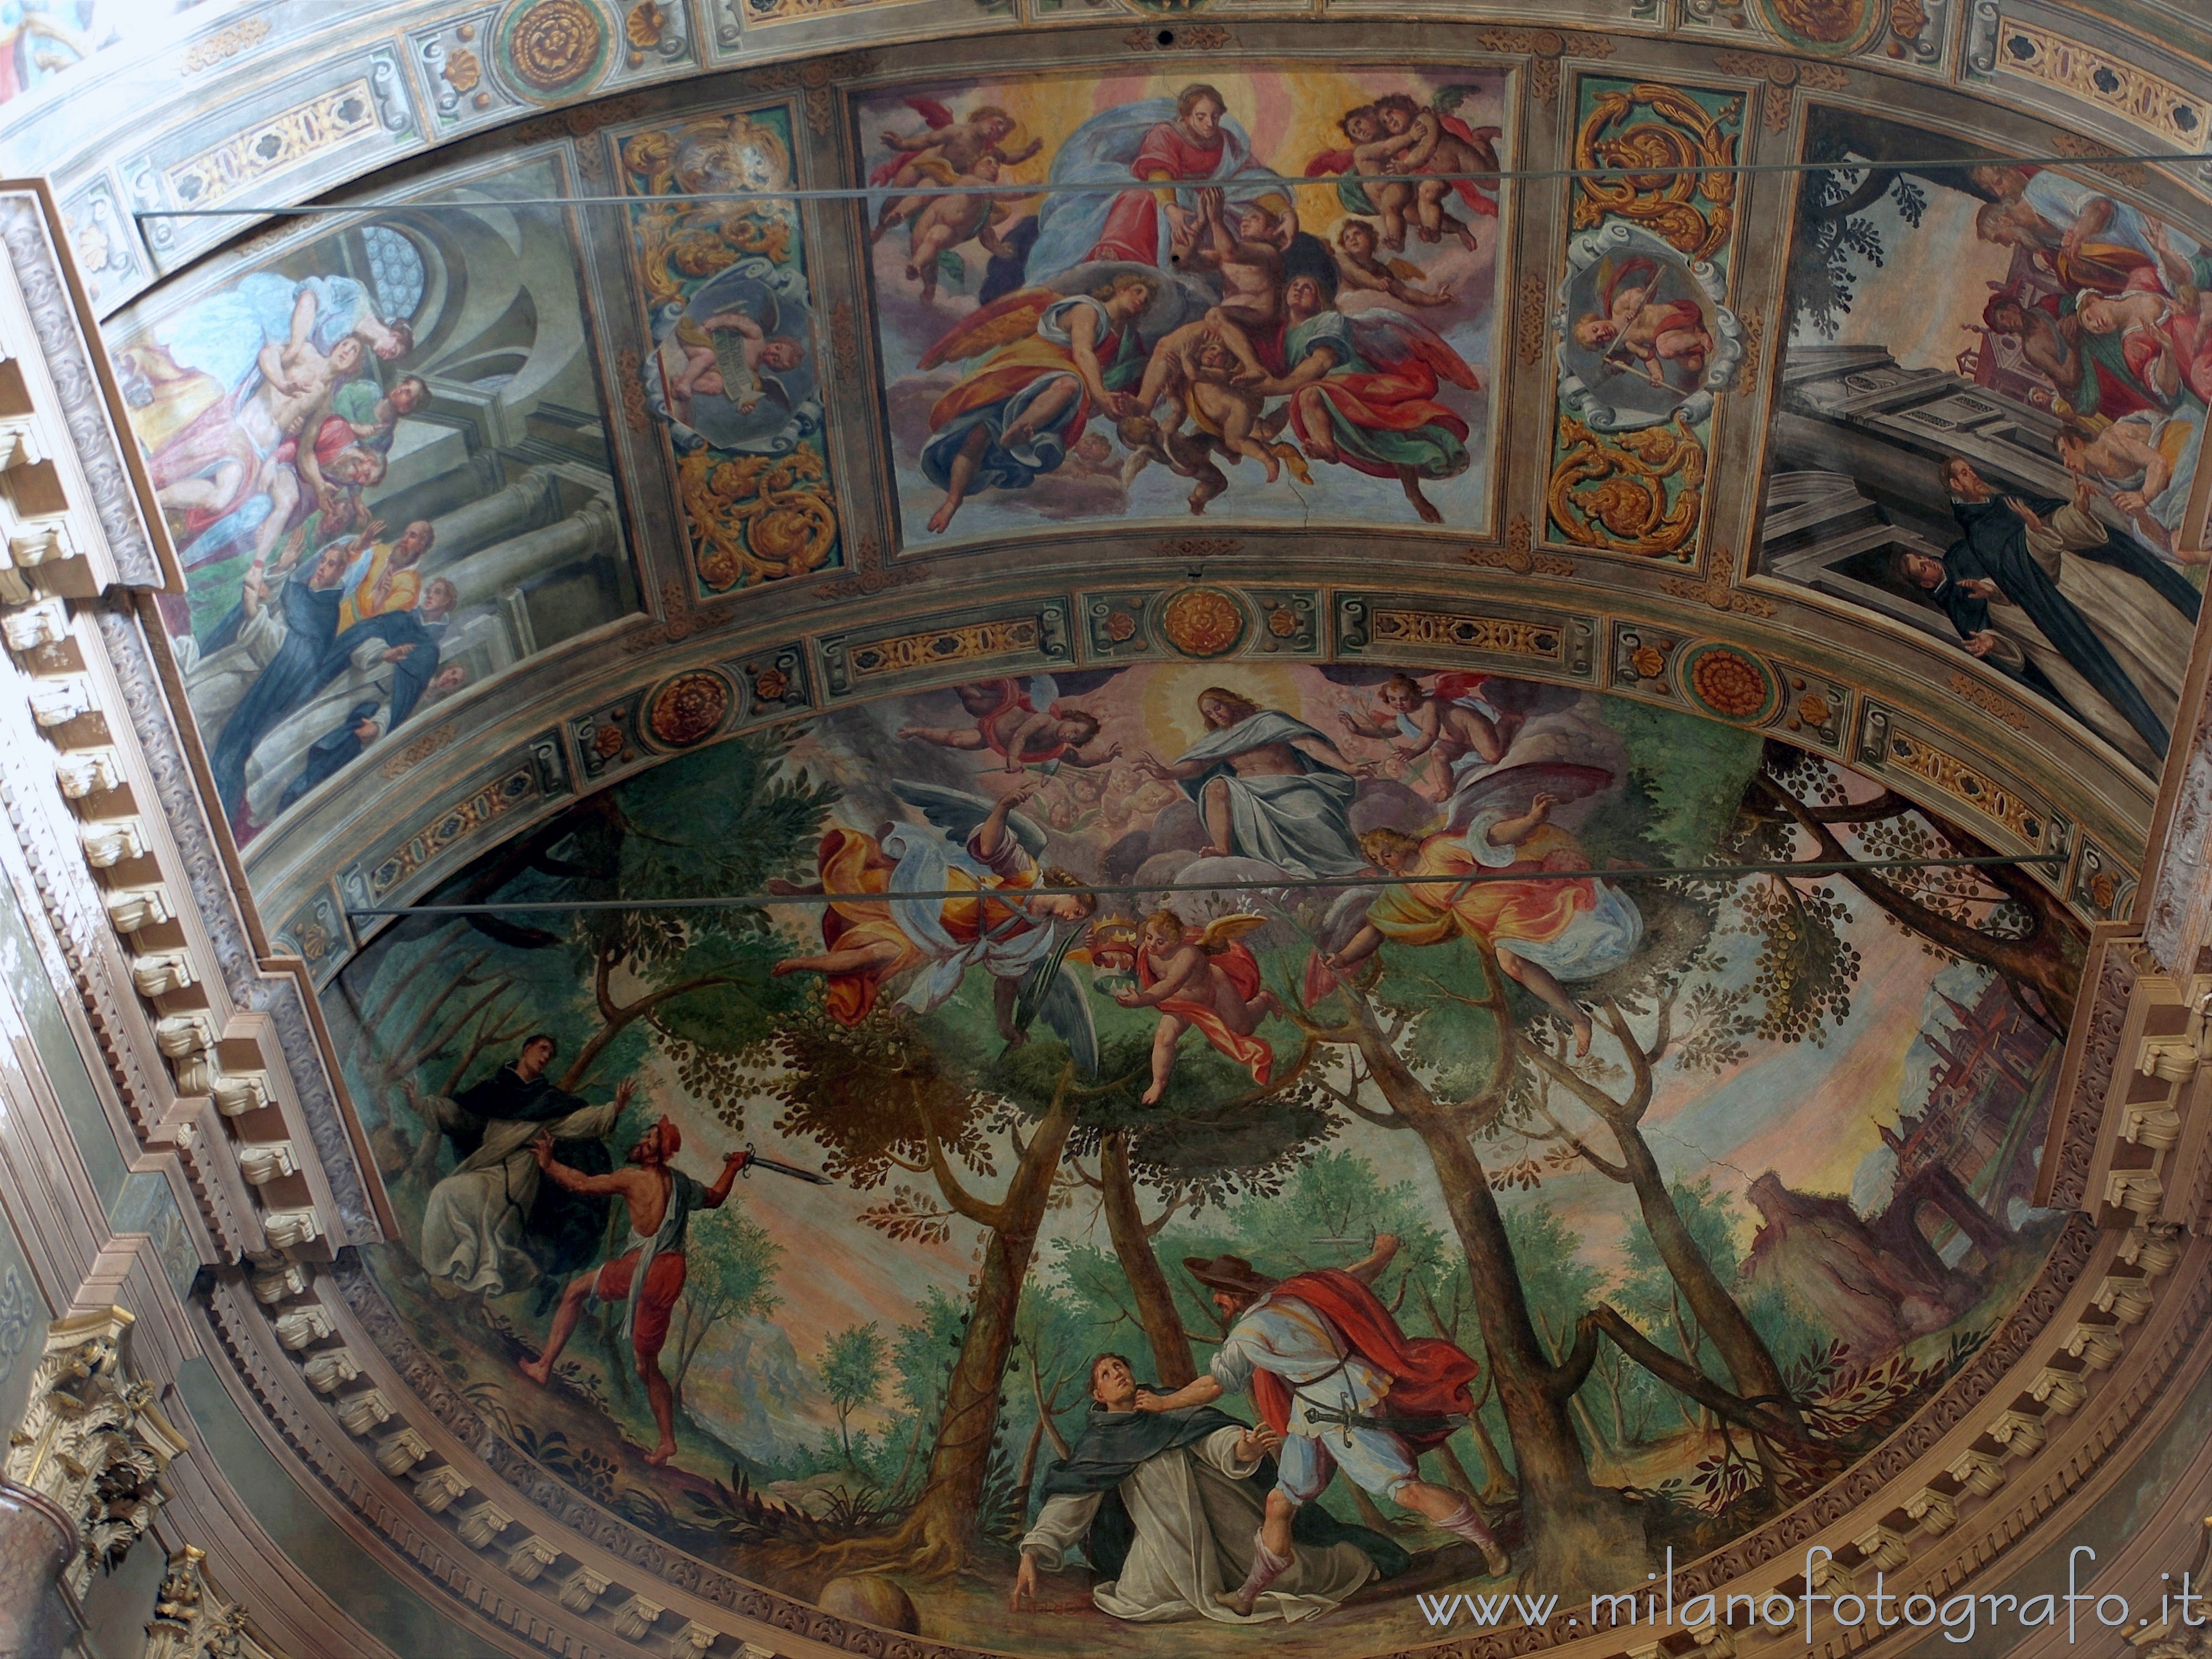 Novara (Italy): Frescoes on the ceiling of the apse of the Church of San Pietro al Rosario - Novara (Italy)